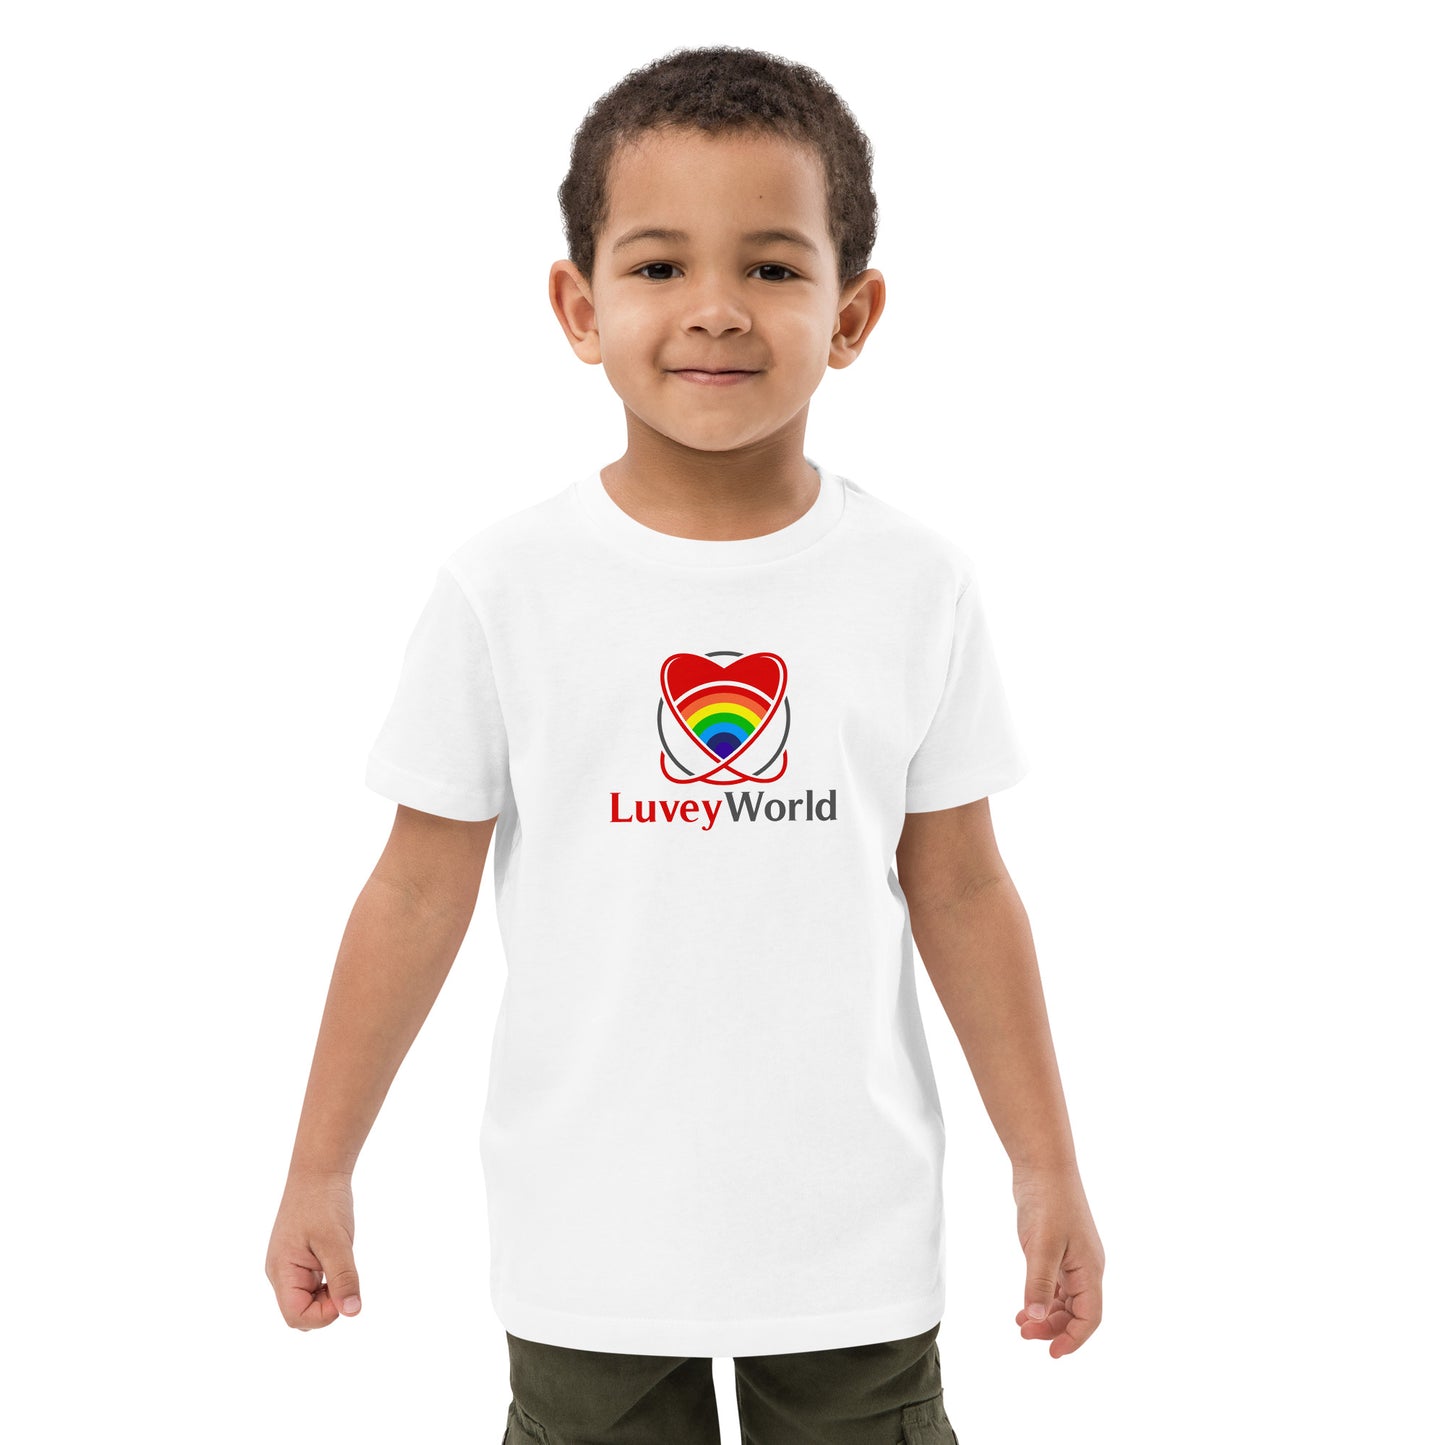 LuveyWorld Organic cotton kids t-shirt